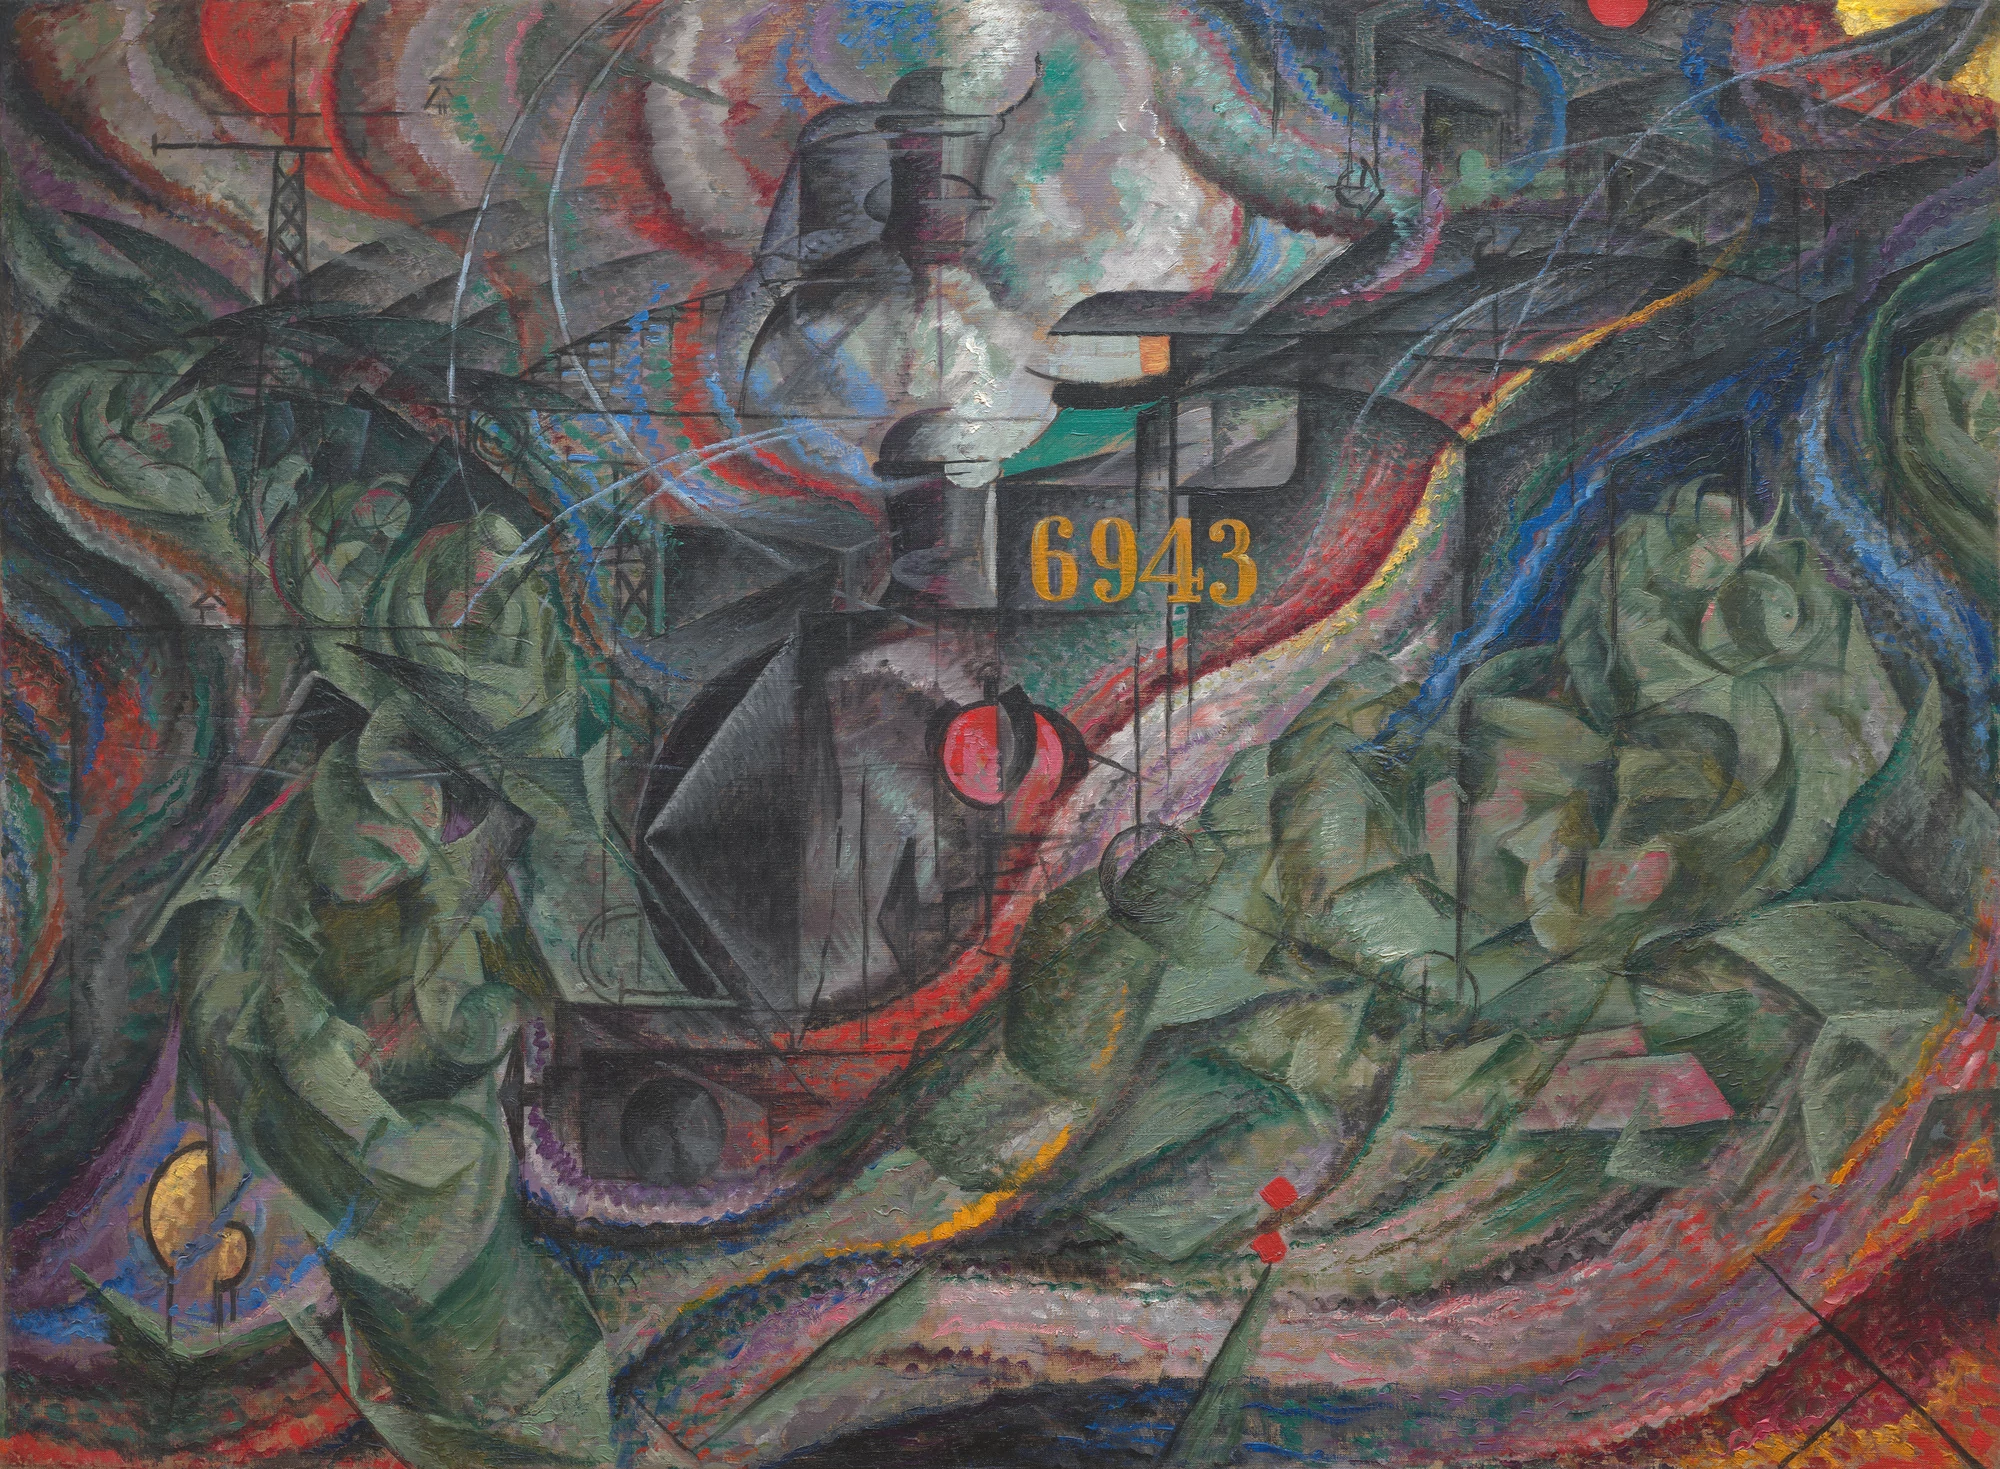 States of Mind I: The Farewells, Umberto Boccioni